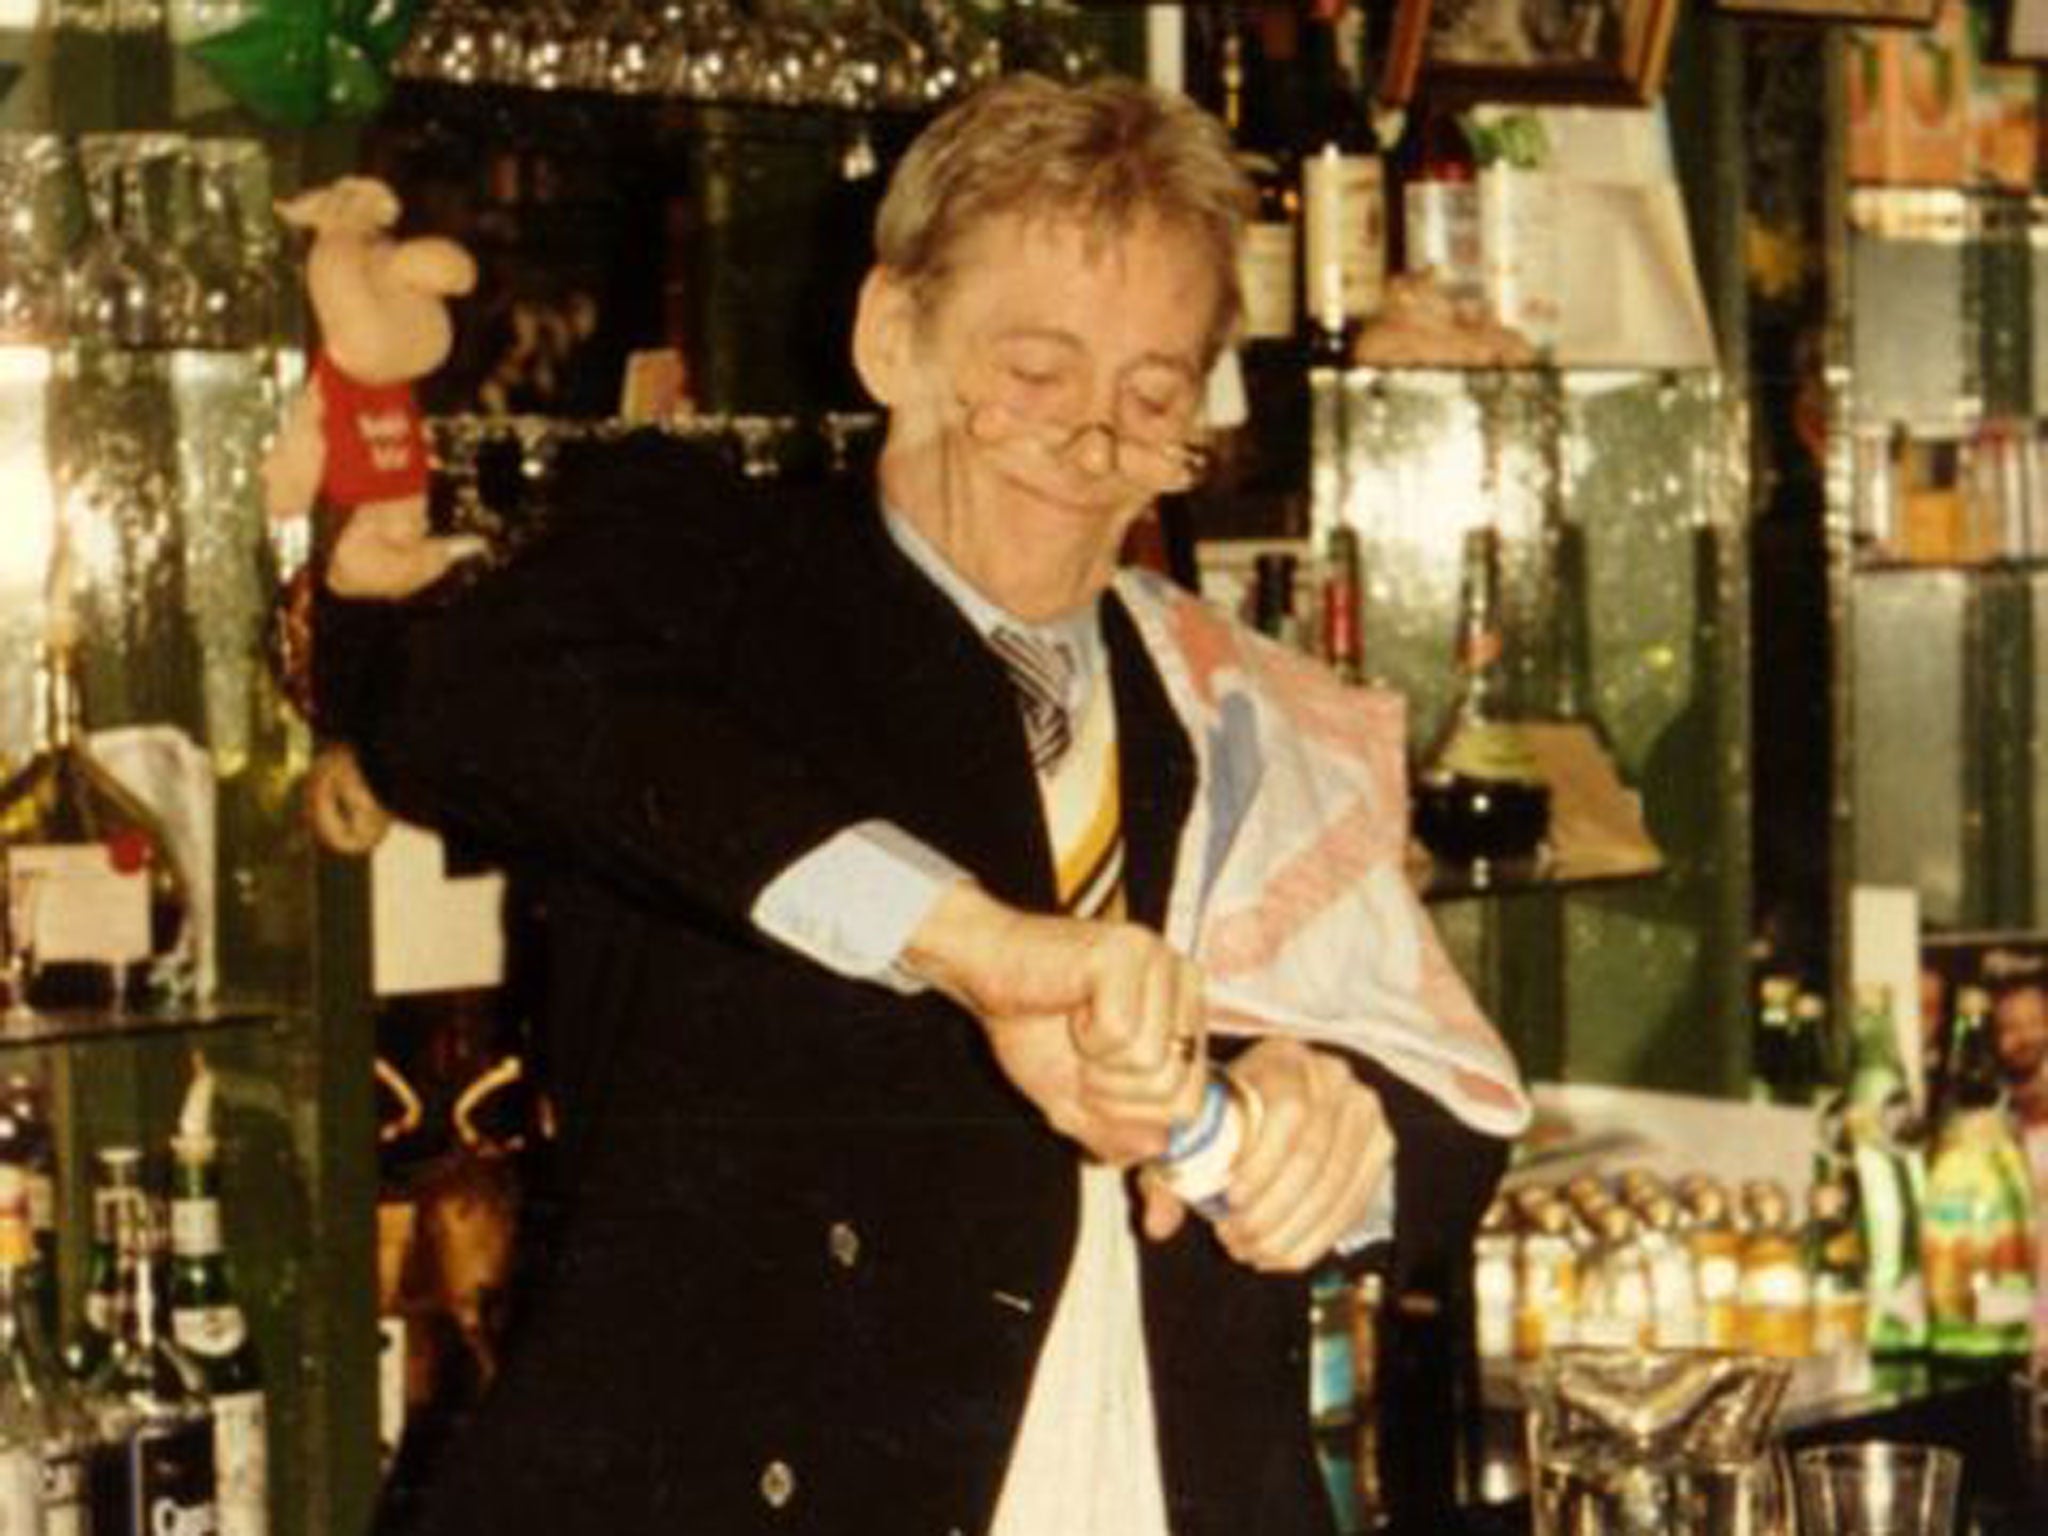 Peter O'Toole tending the bar